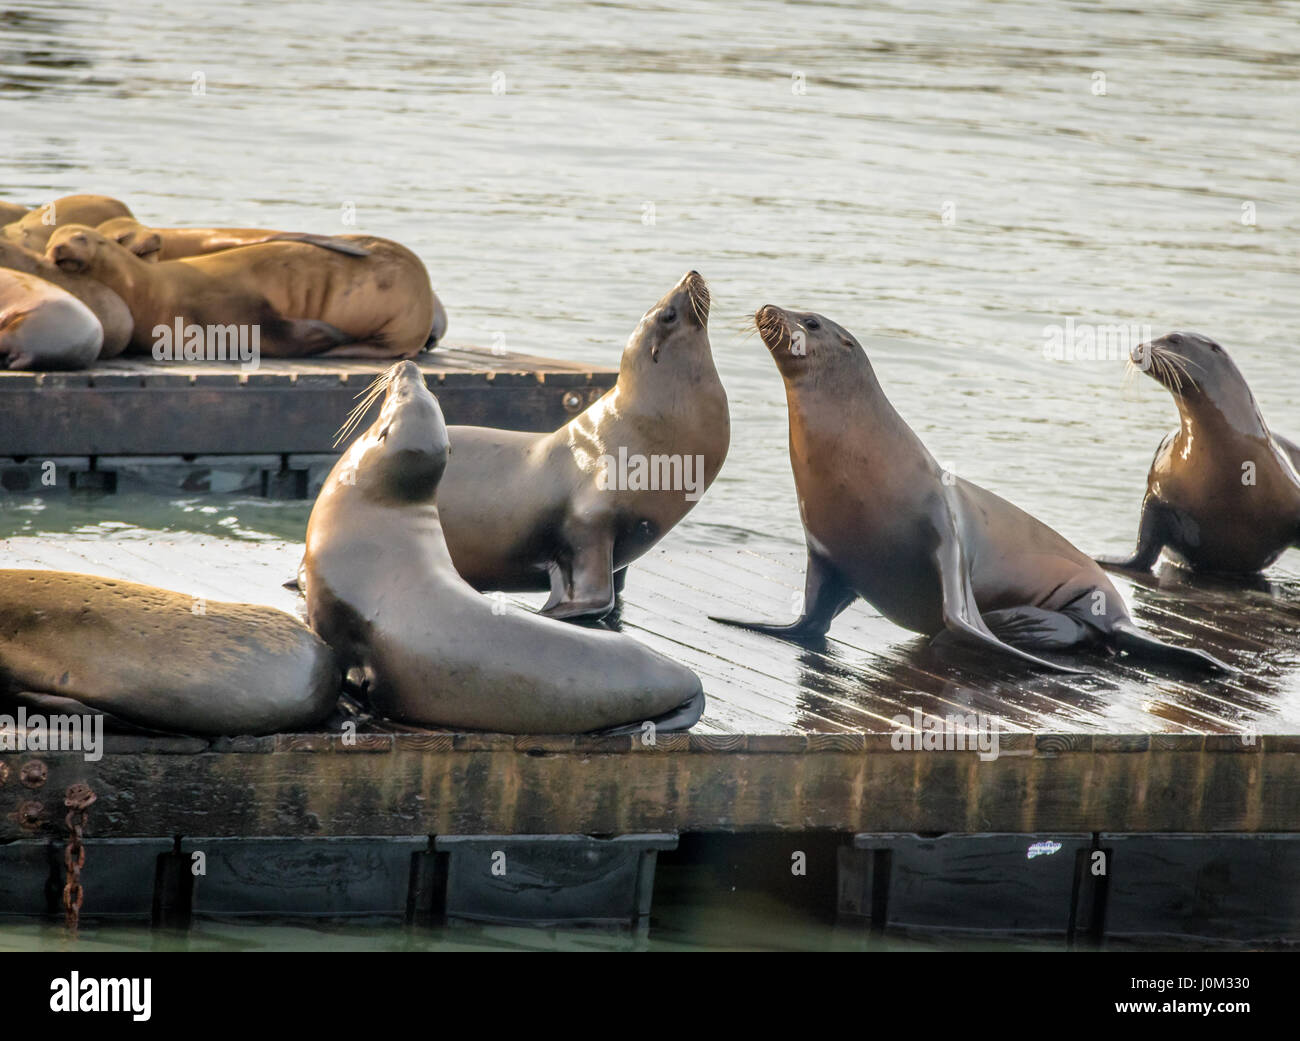 Sea Lions of Pier 39 at Fishermans Wharf - San Francisco, California, USA Stock Photo